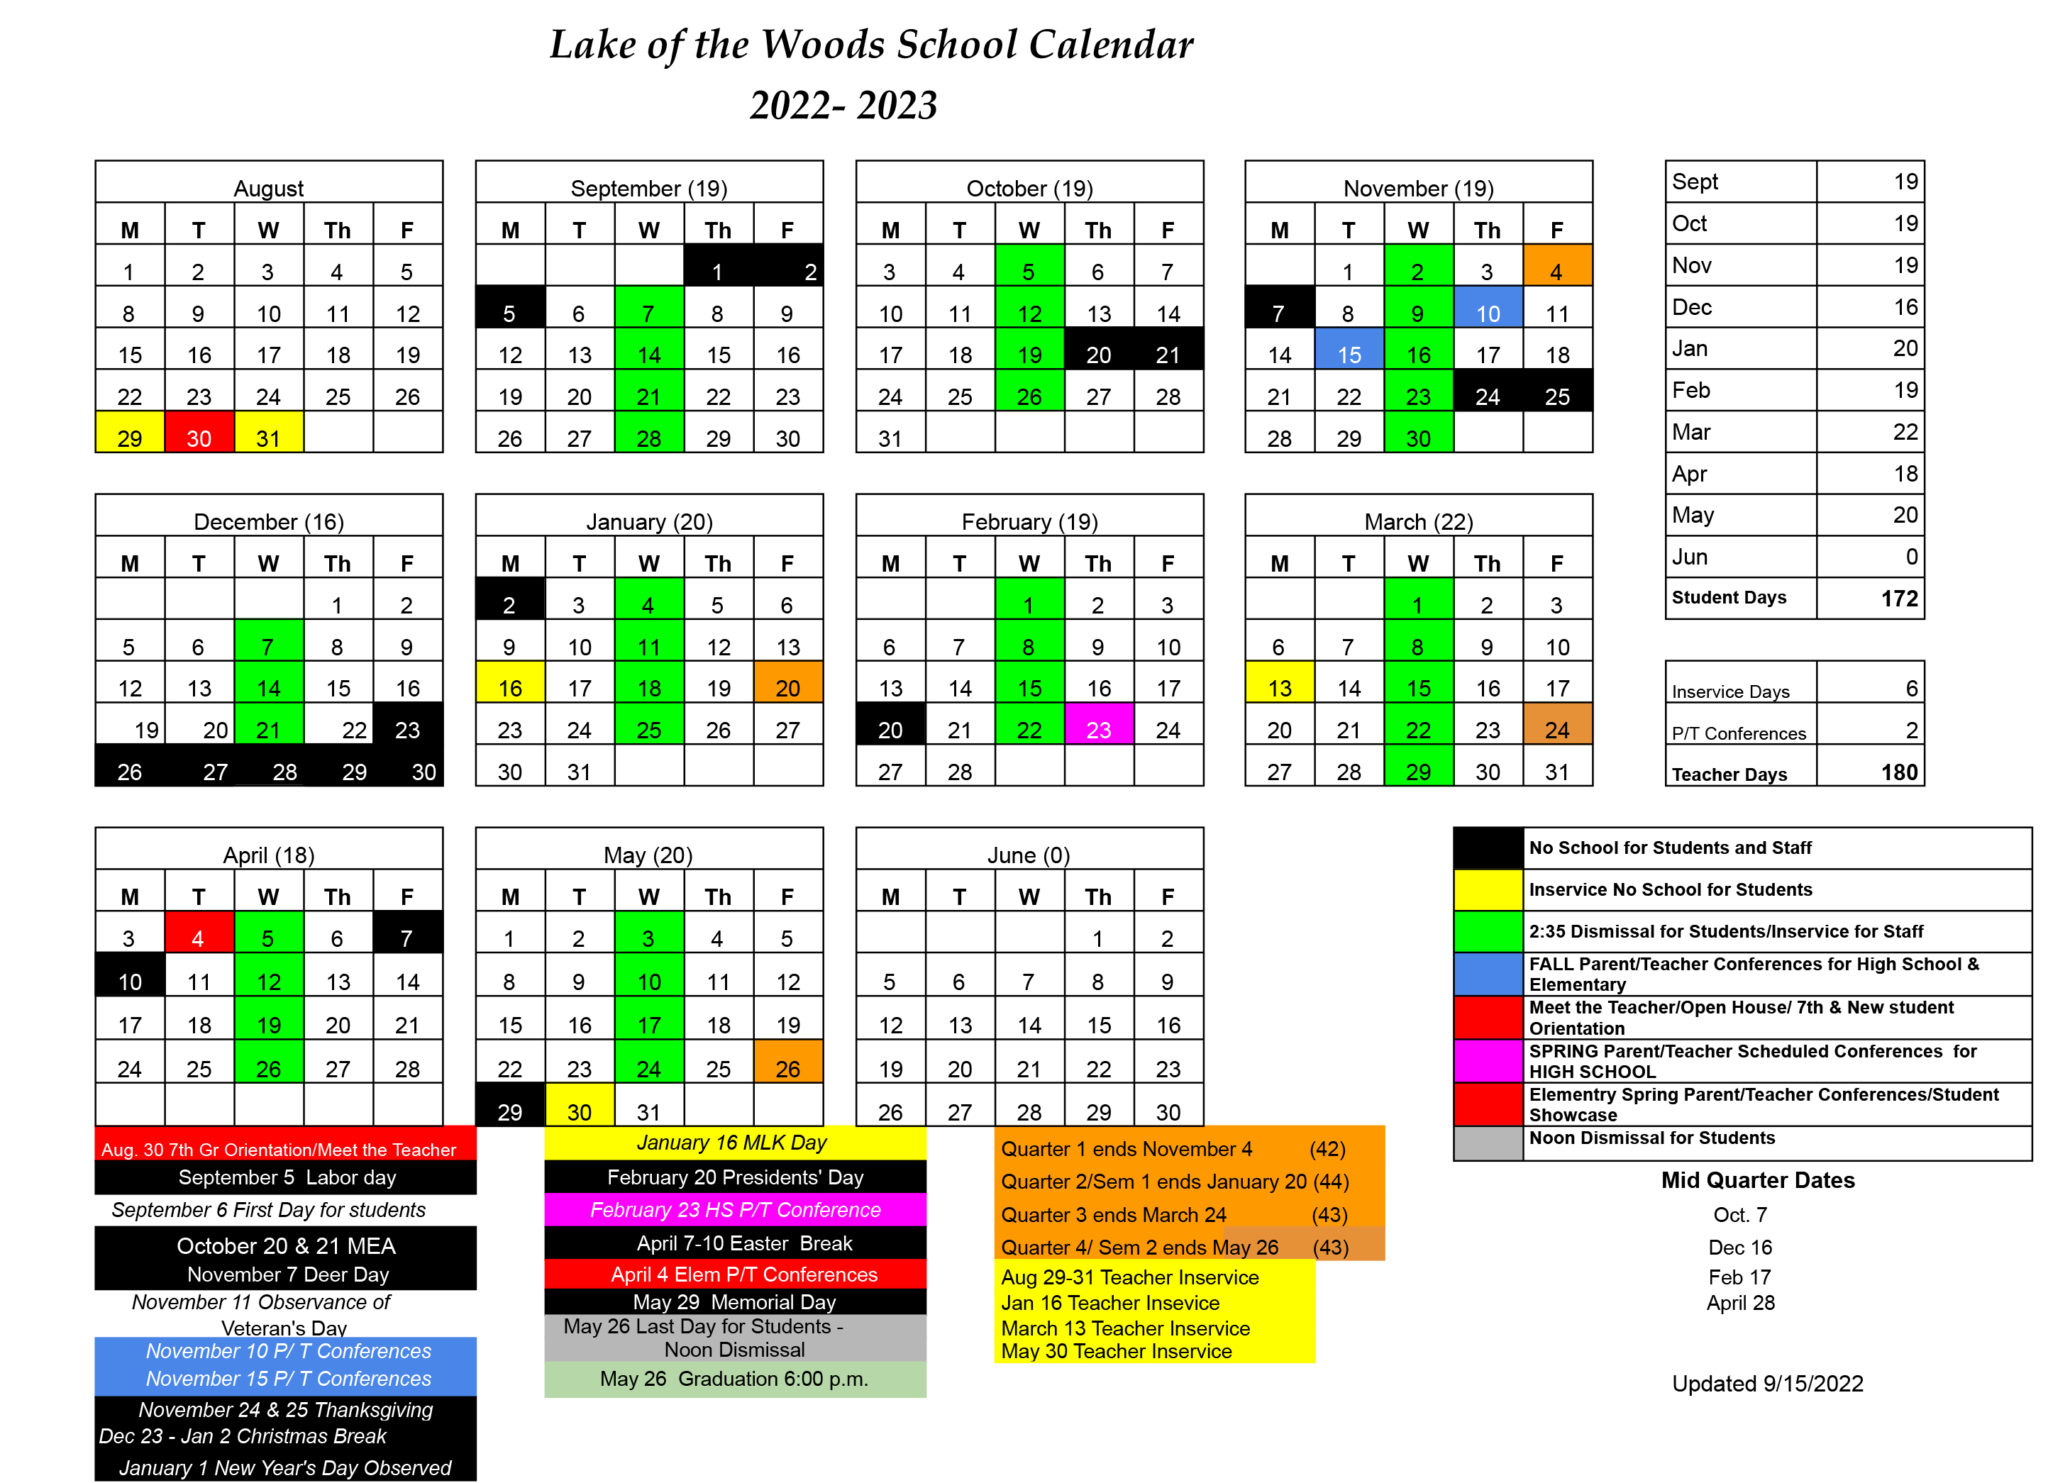 District Calendar Lake of the Woods School